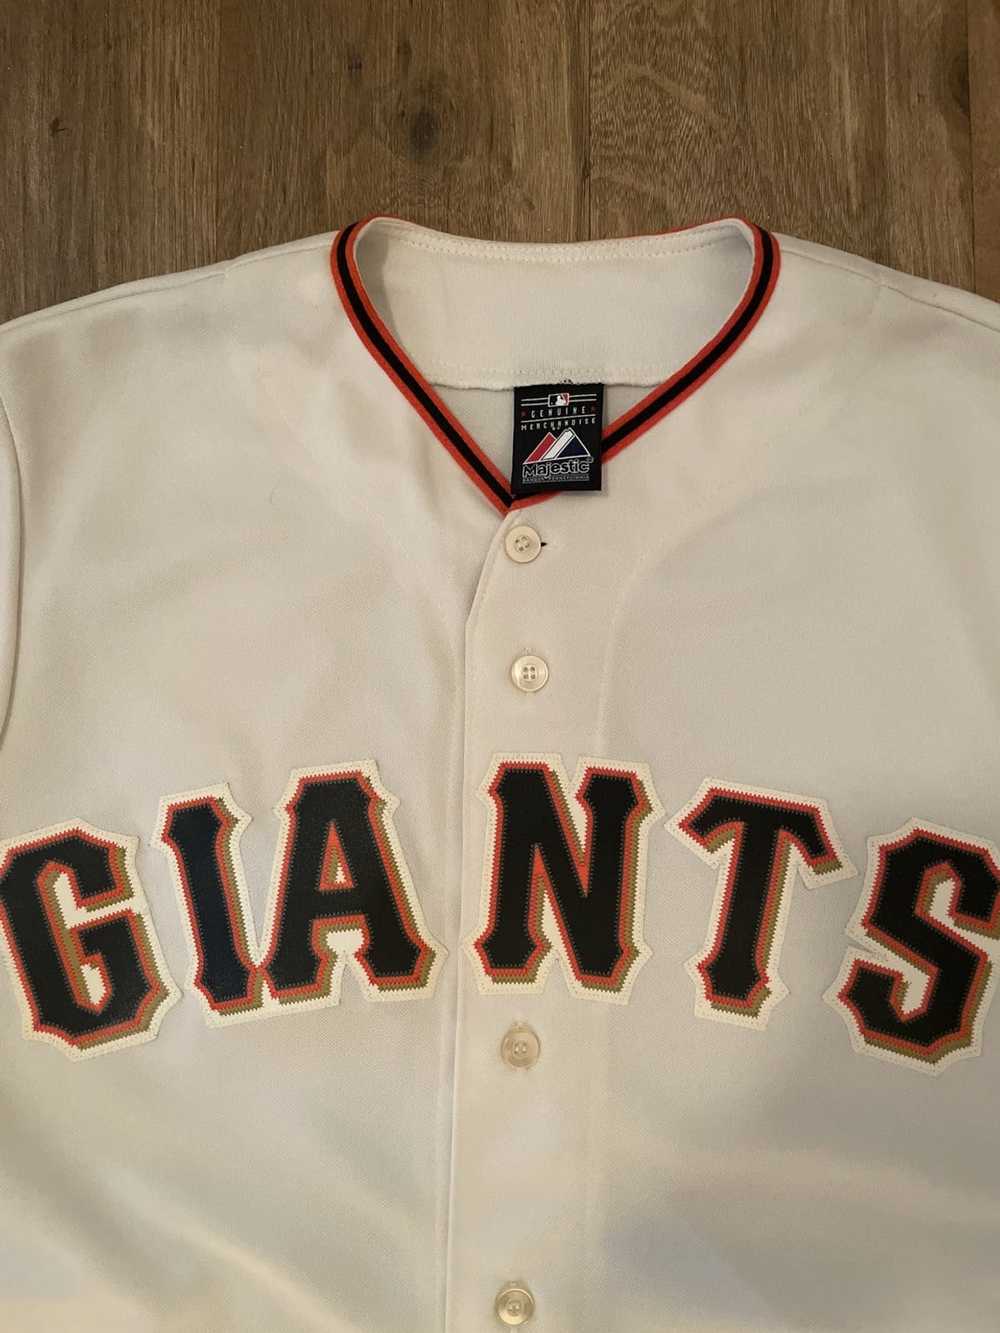 Majestic San Francisco Giants Vtg Authentic Baseball Jersey Size 48 